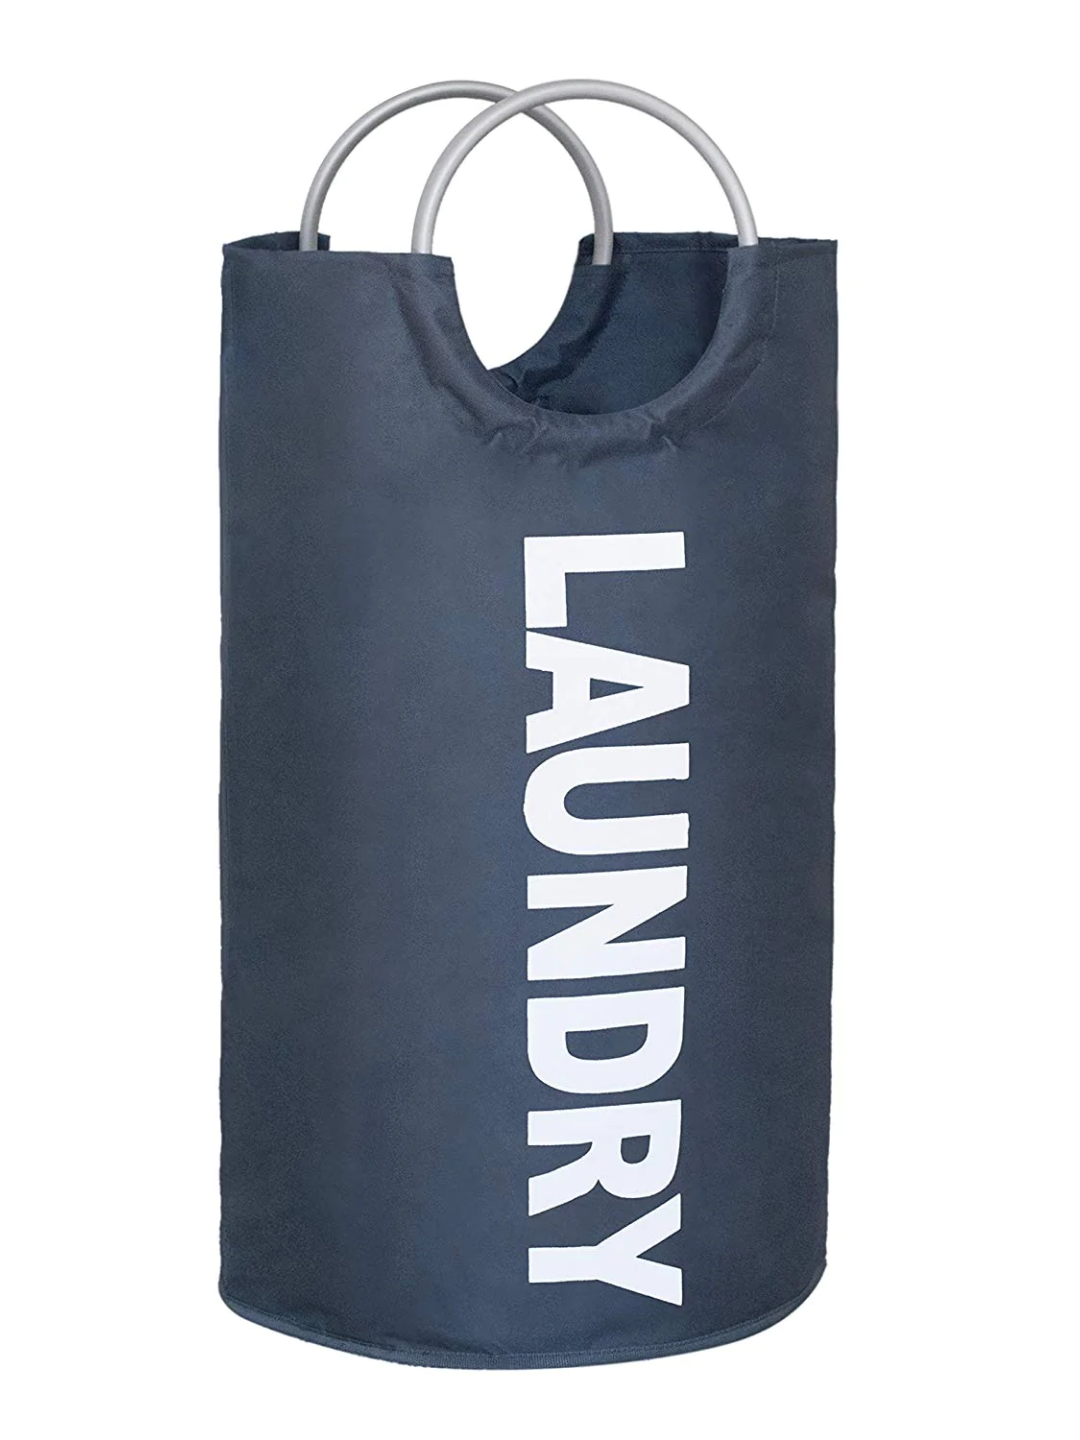 Laundry Hamper - Carry